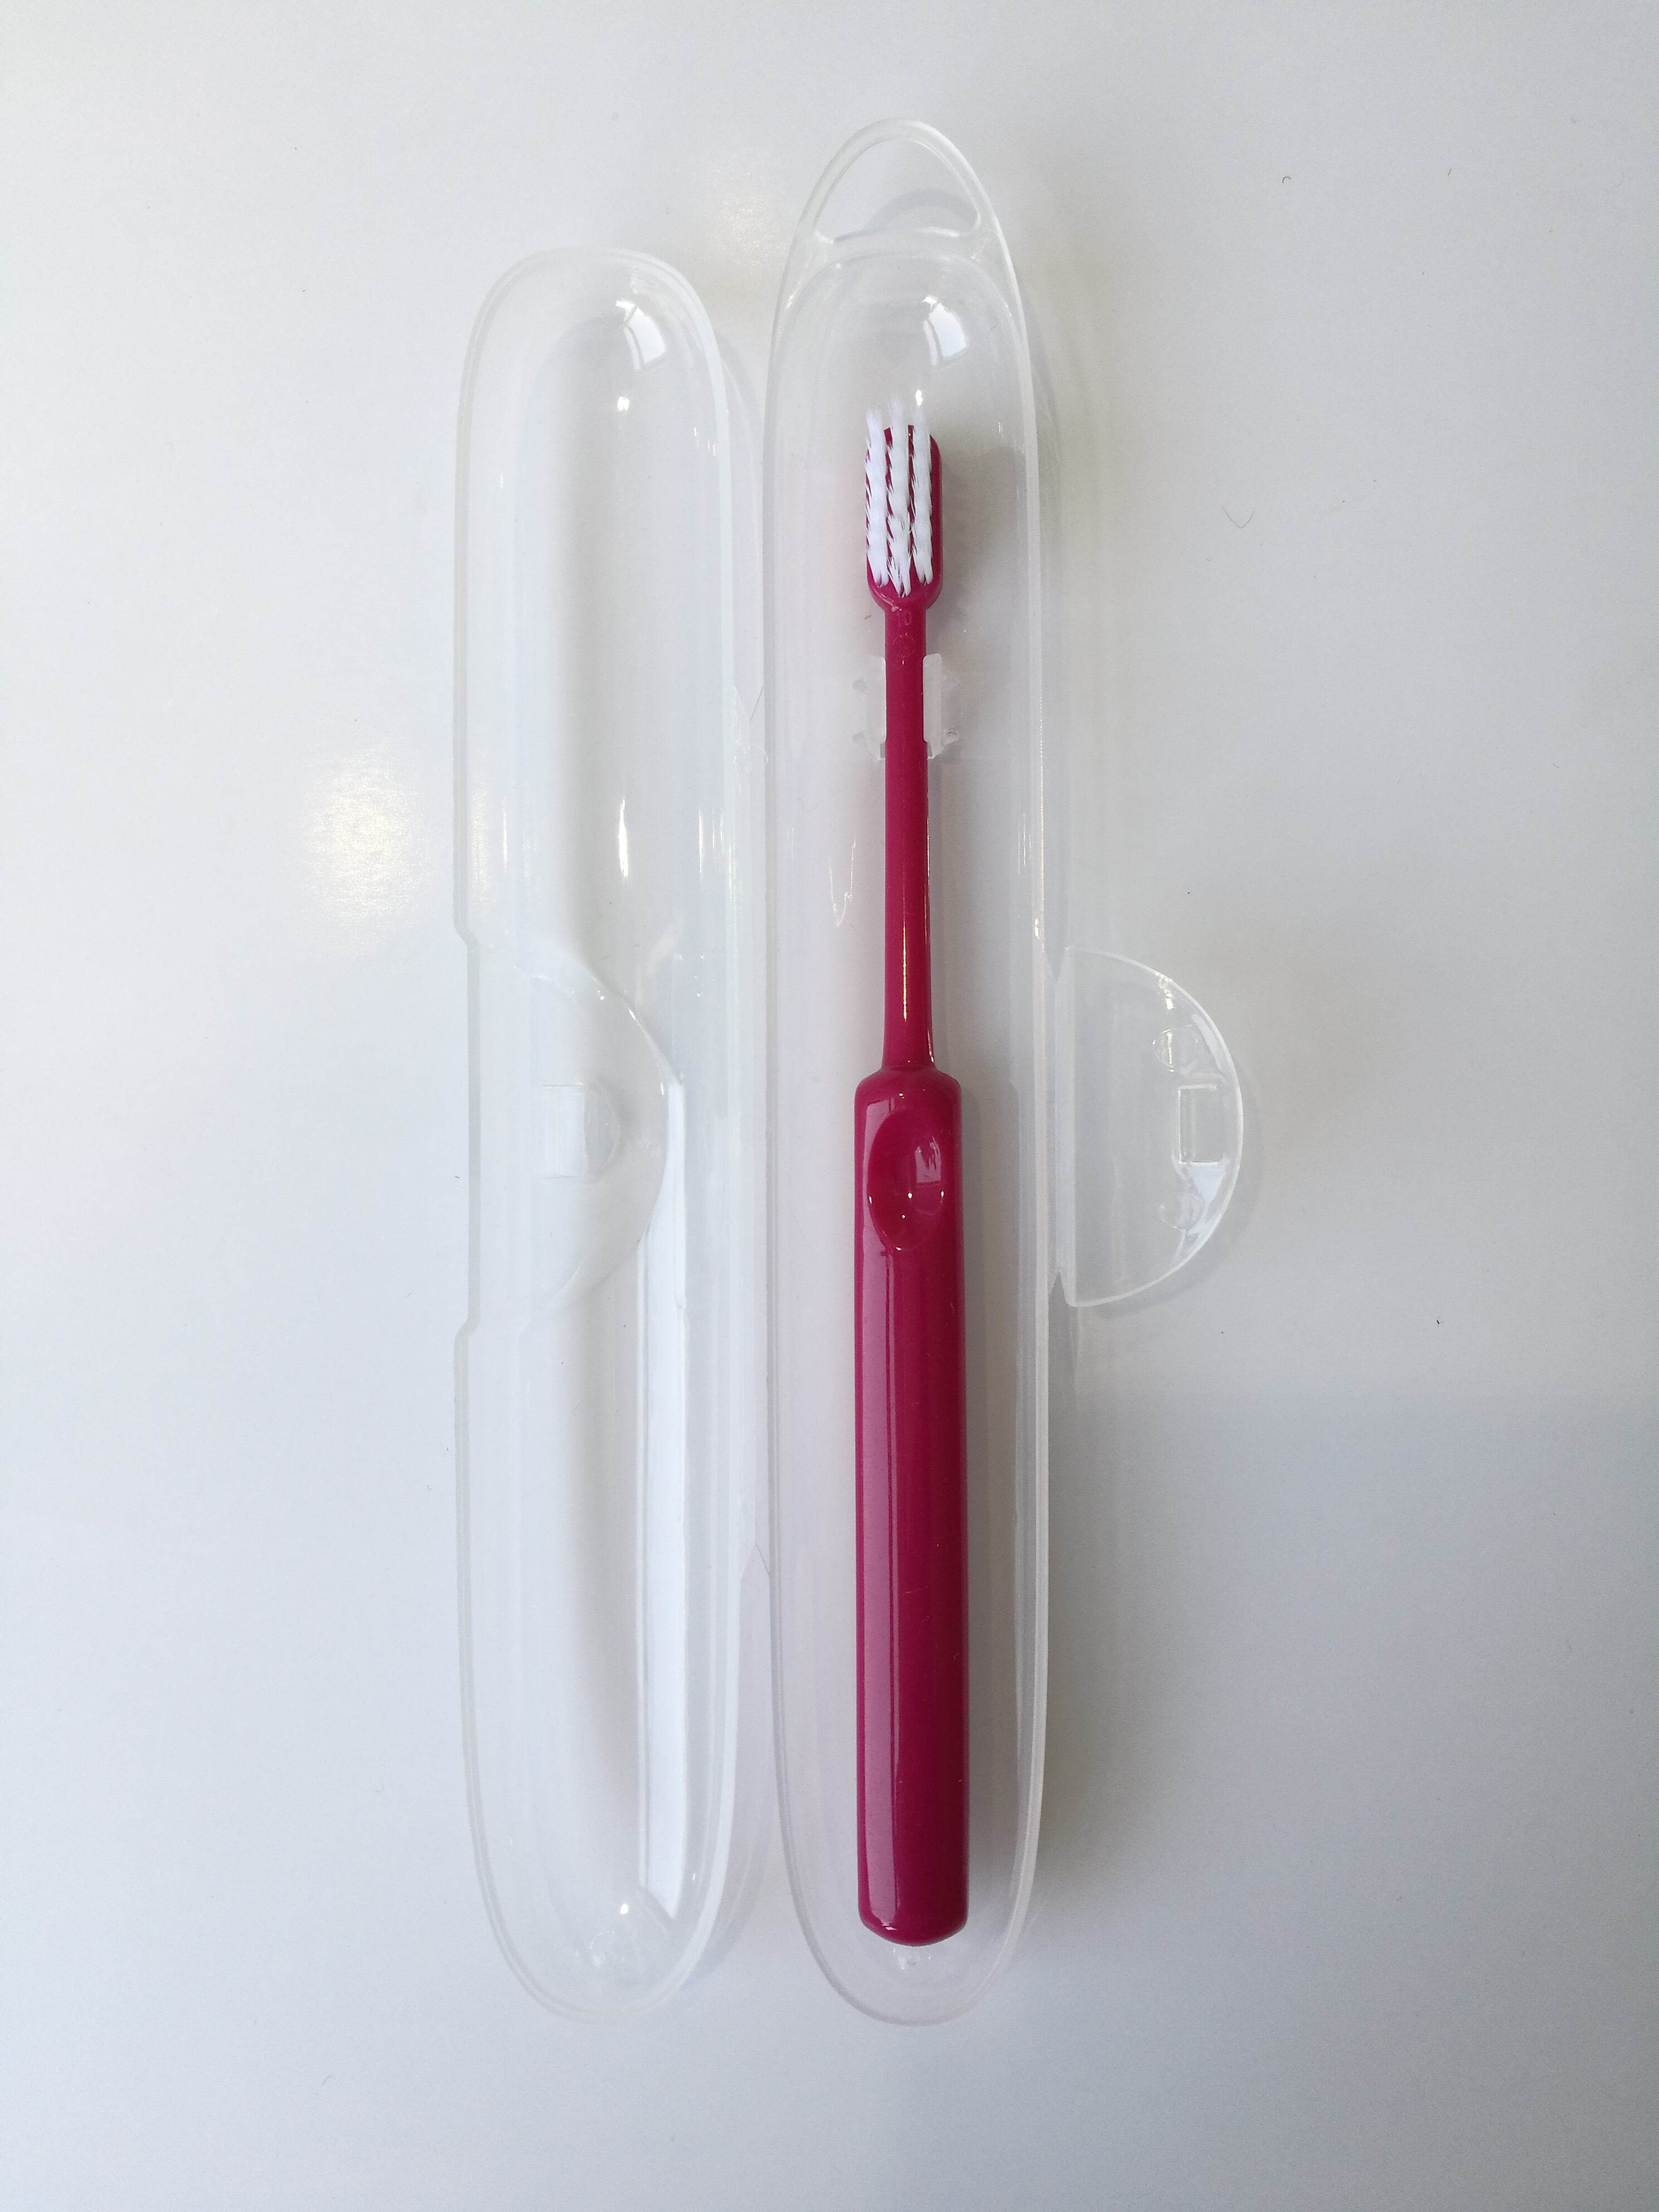 Yangzhou baru kedatangan Dispenser Pasta Gigi Plastik 2 Cangkir Pemegang Sikat Gigi Dinding Magnetik pemasok